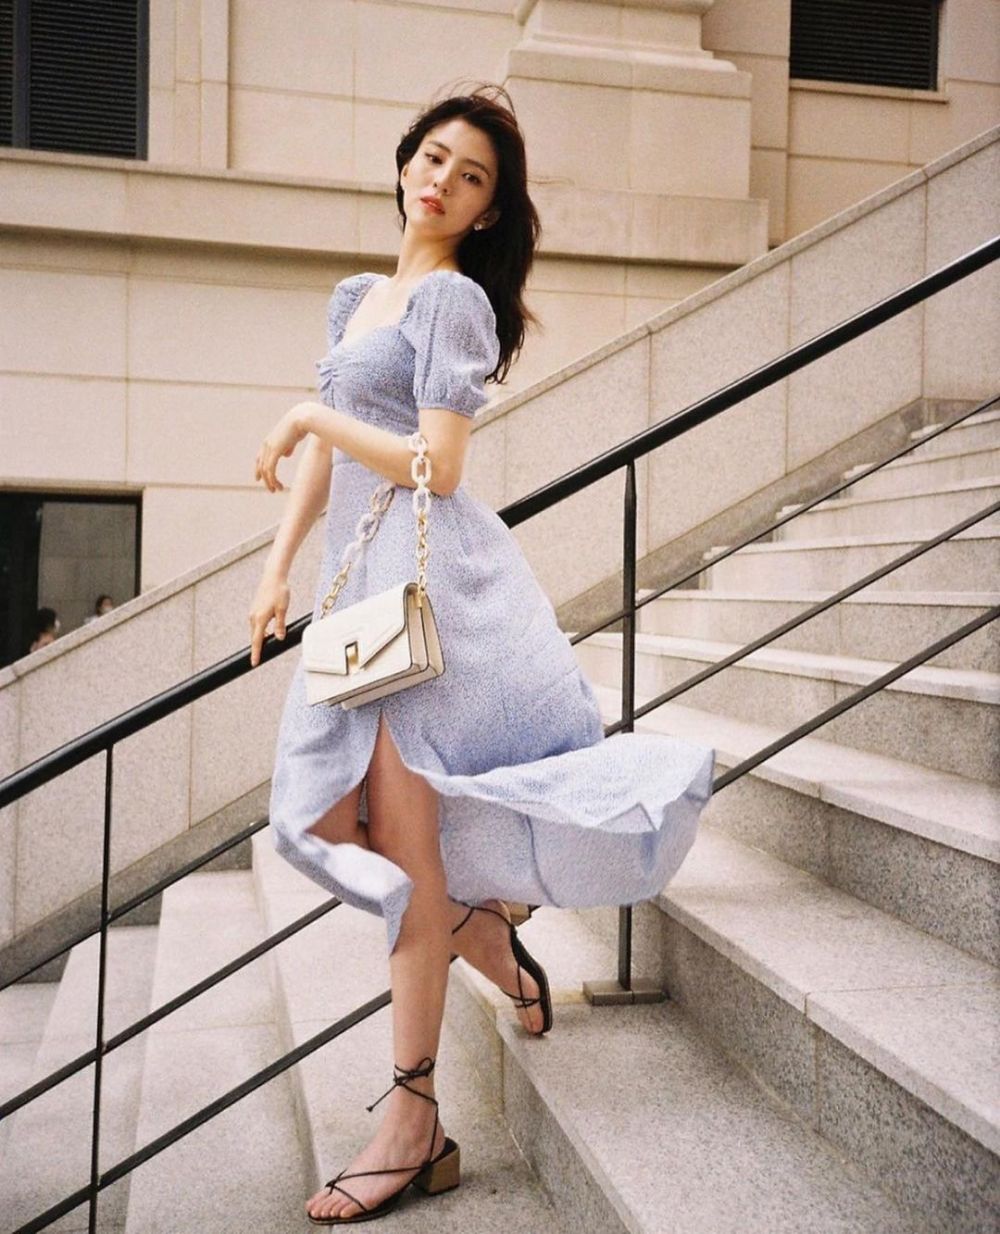 14 Inspirasi Dress ala Aktris Han So Hee, Penampilan Makin Girly!